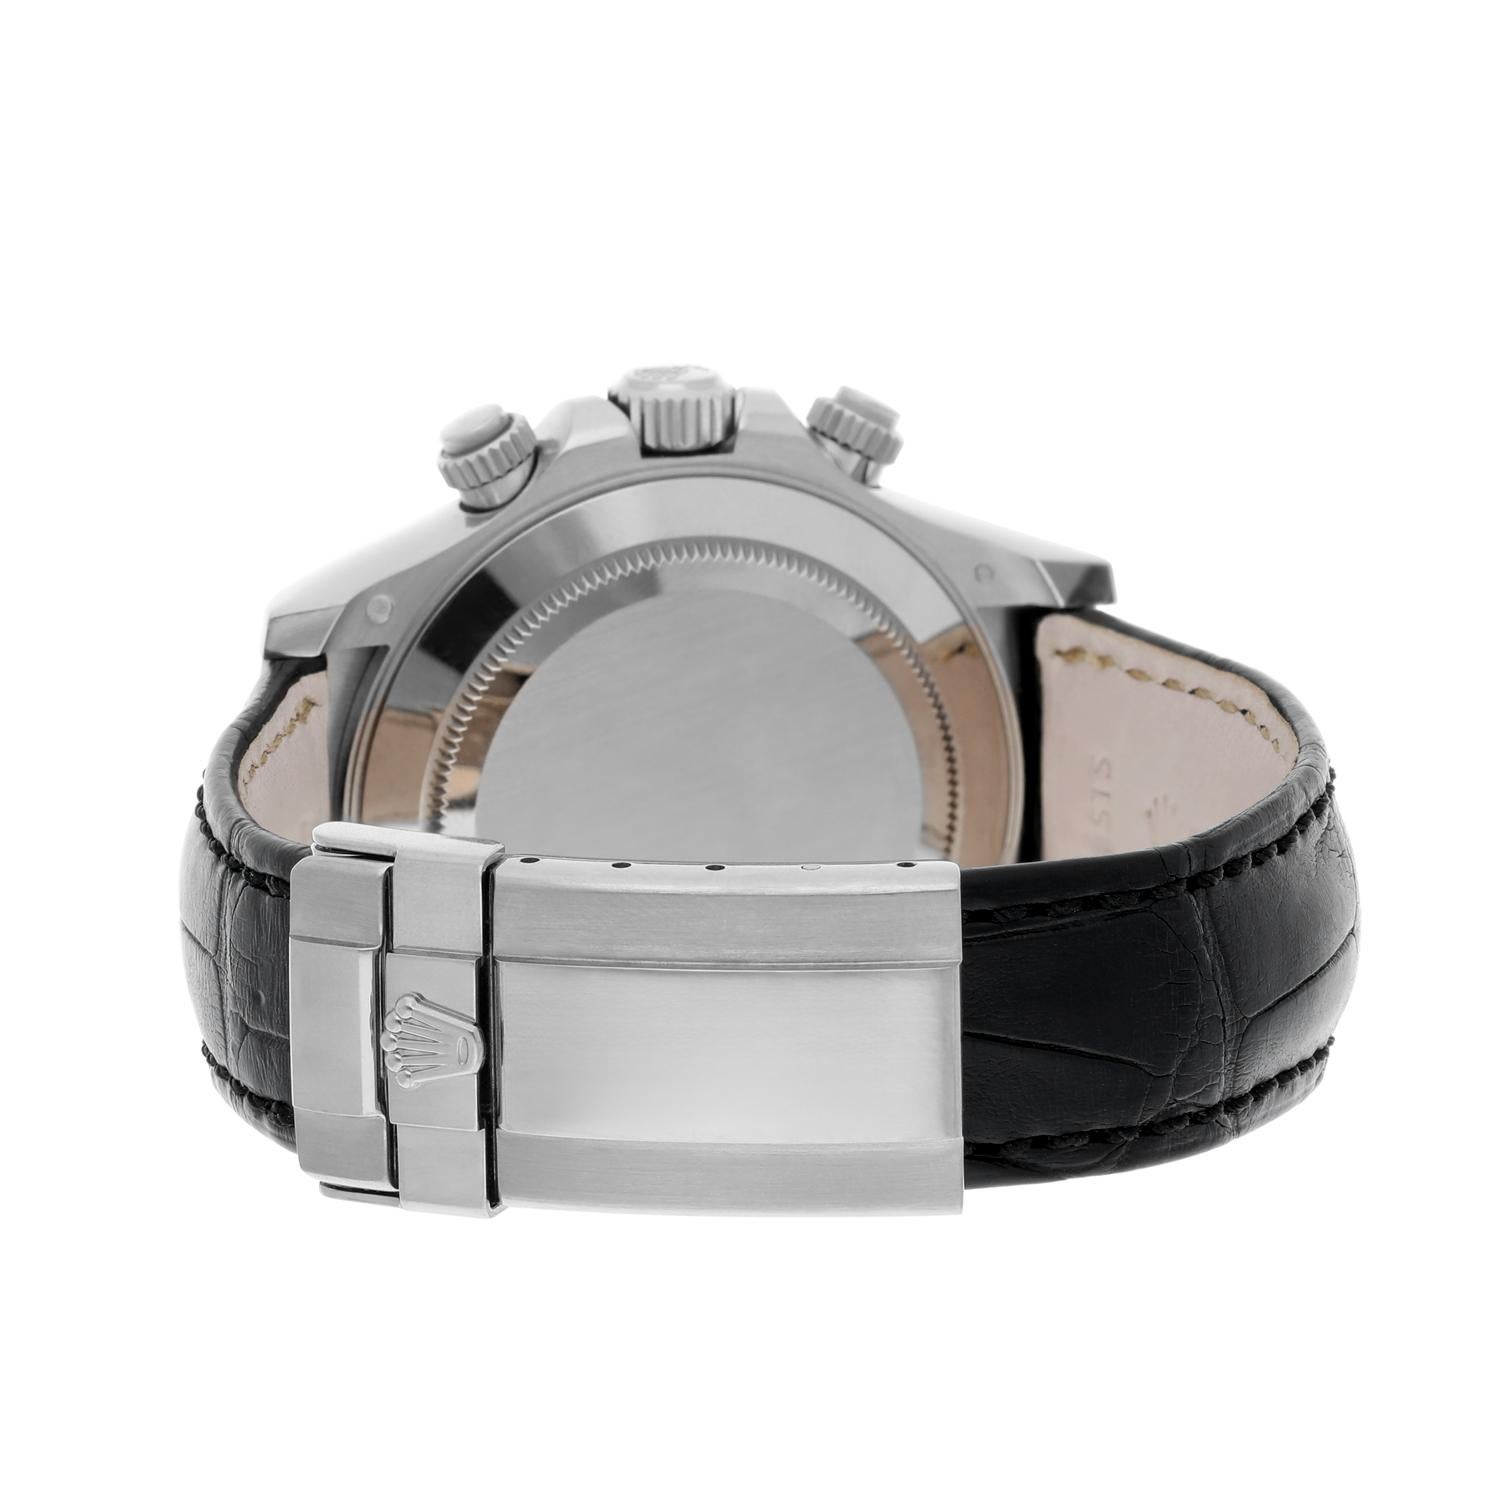 Rolex 116519 Cosmograph Daytona Meteorite Dial White Gold Men's Watch Complete 4